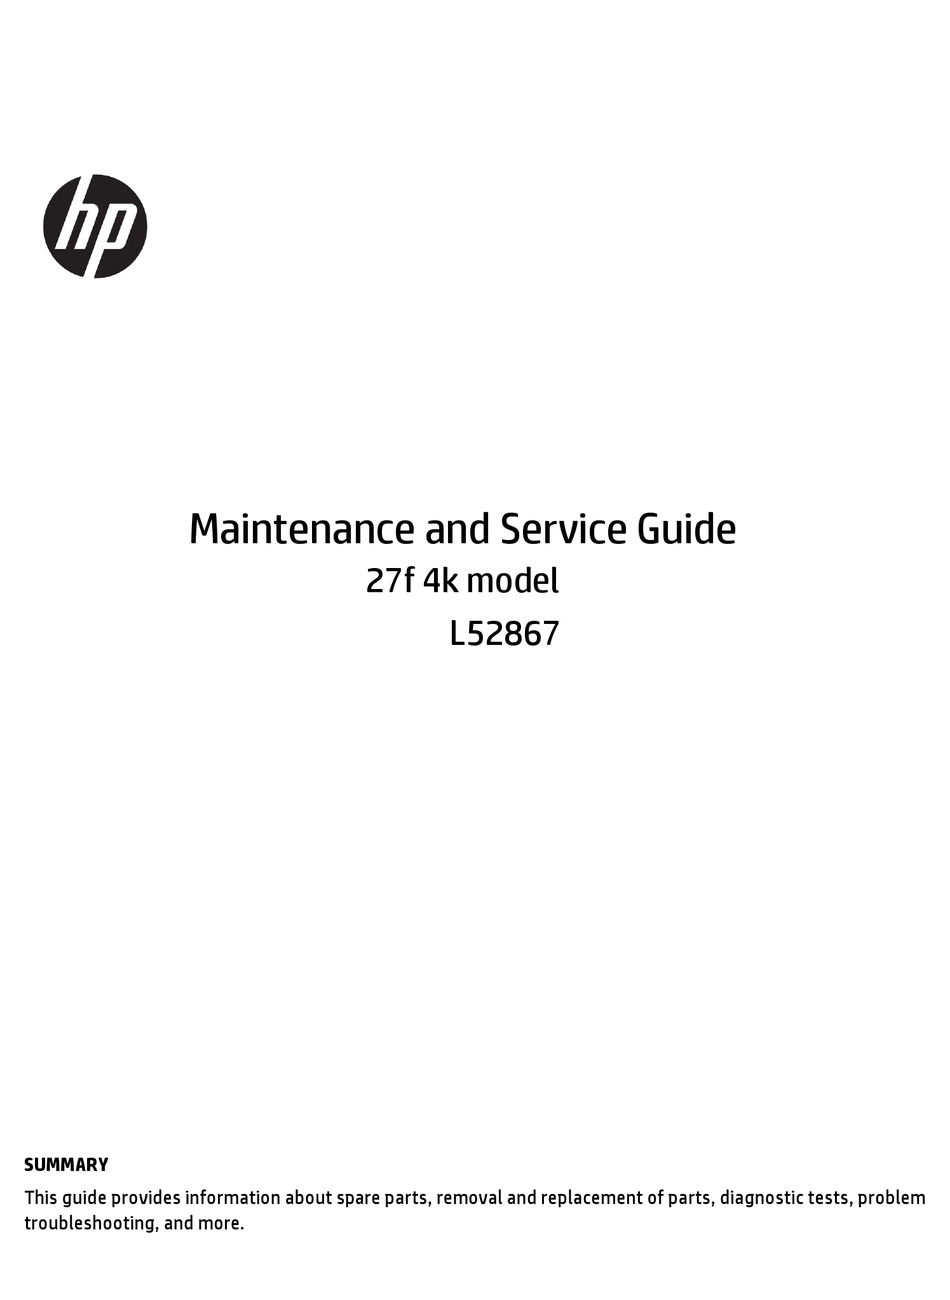 Download Hp C7280 Service Manual Pdf free